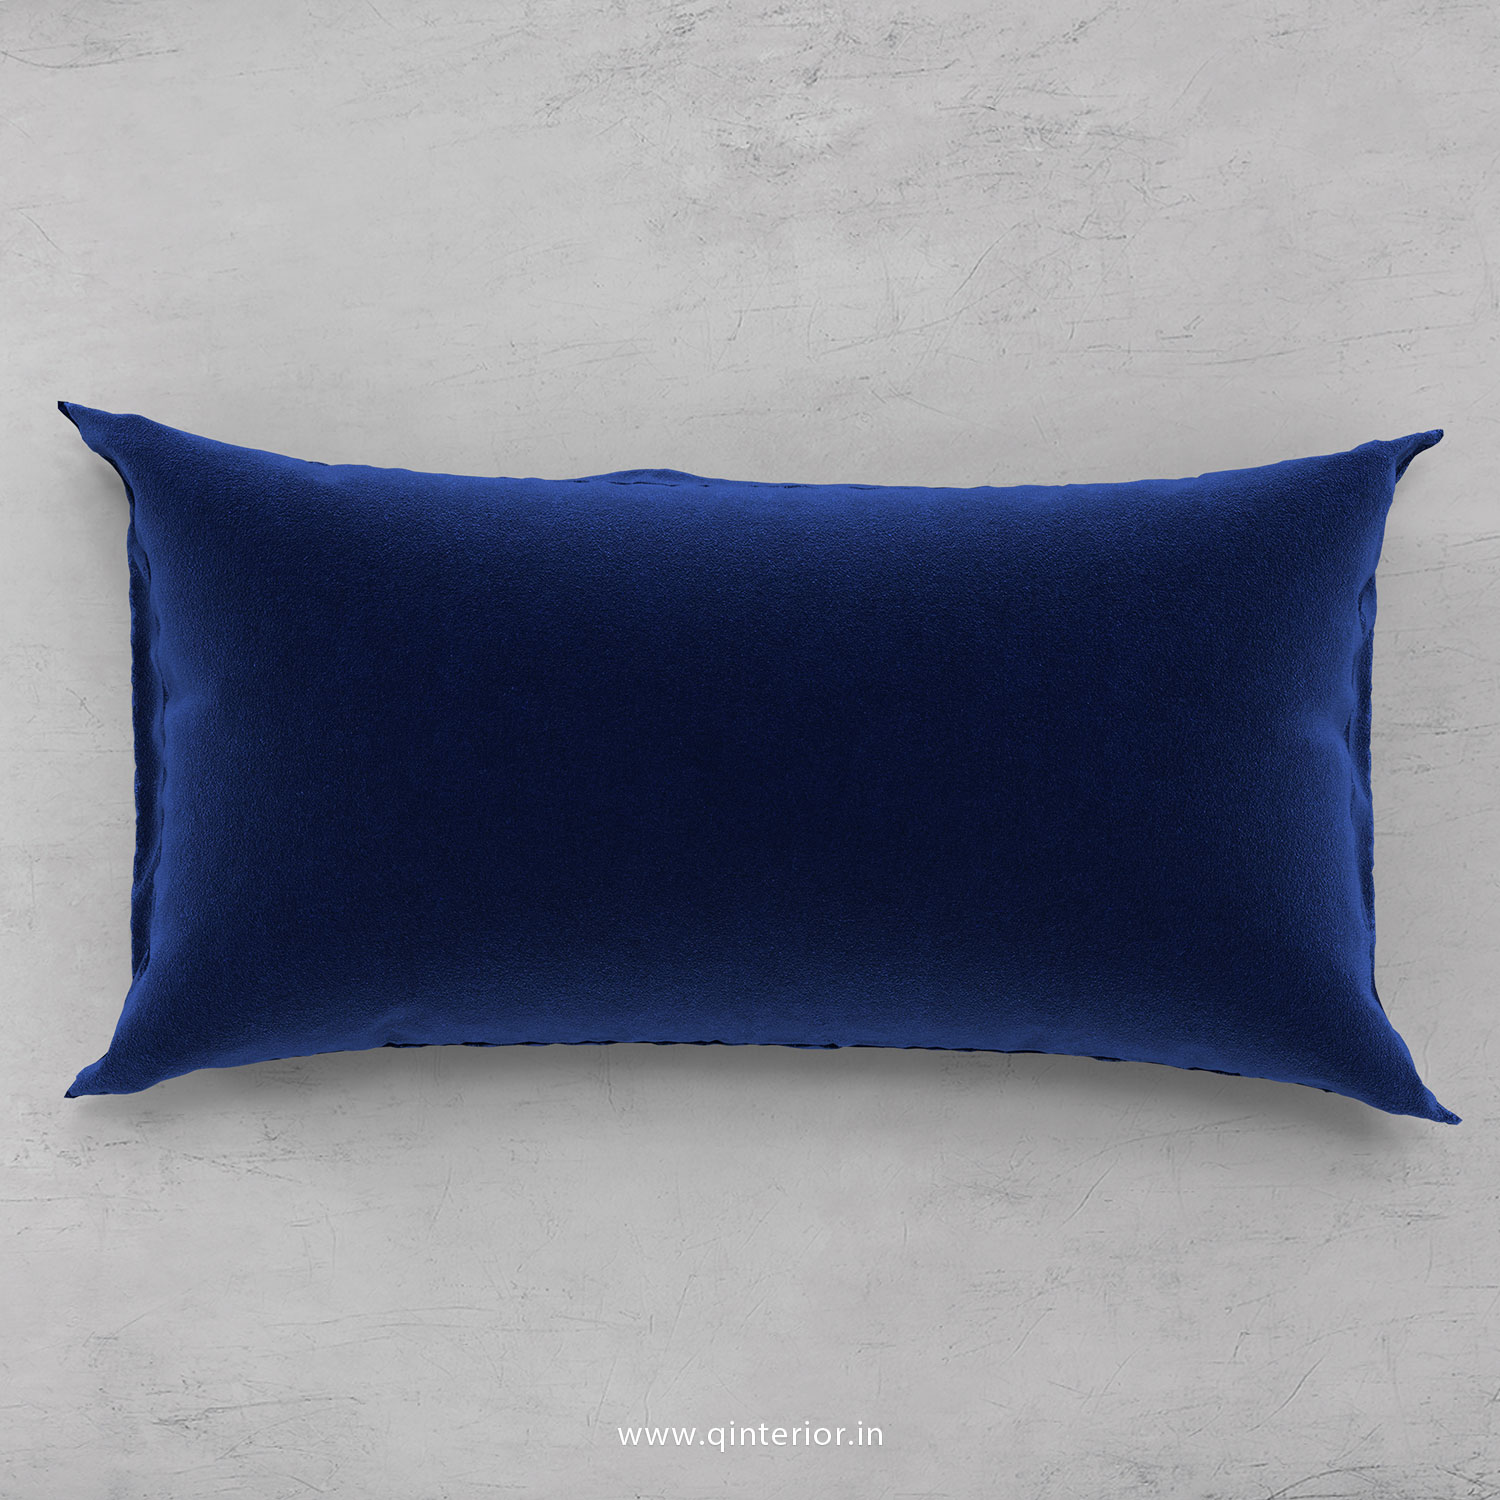 Cushion With Cushion Cover in Velvet Fabric - CUS002 VL05